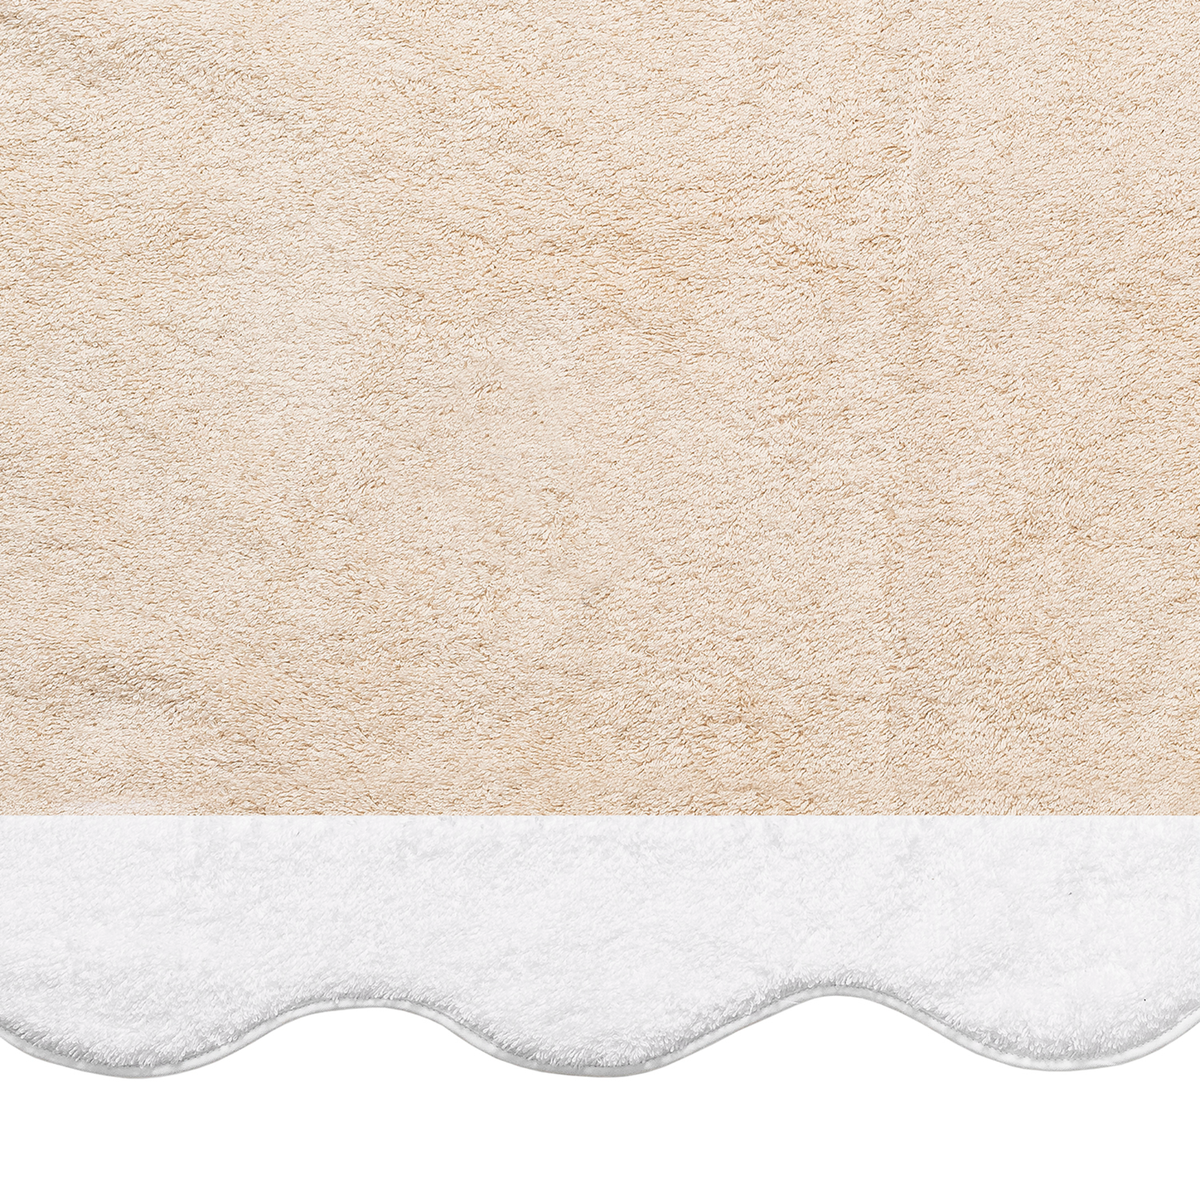 Fabric Closeup of Matouk Neptune Beach Towels in Sand/White Color